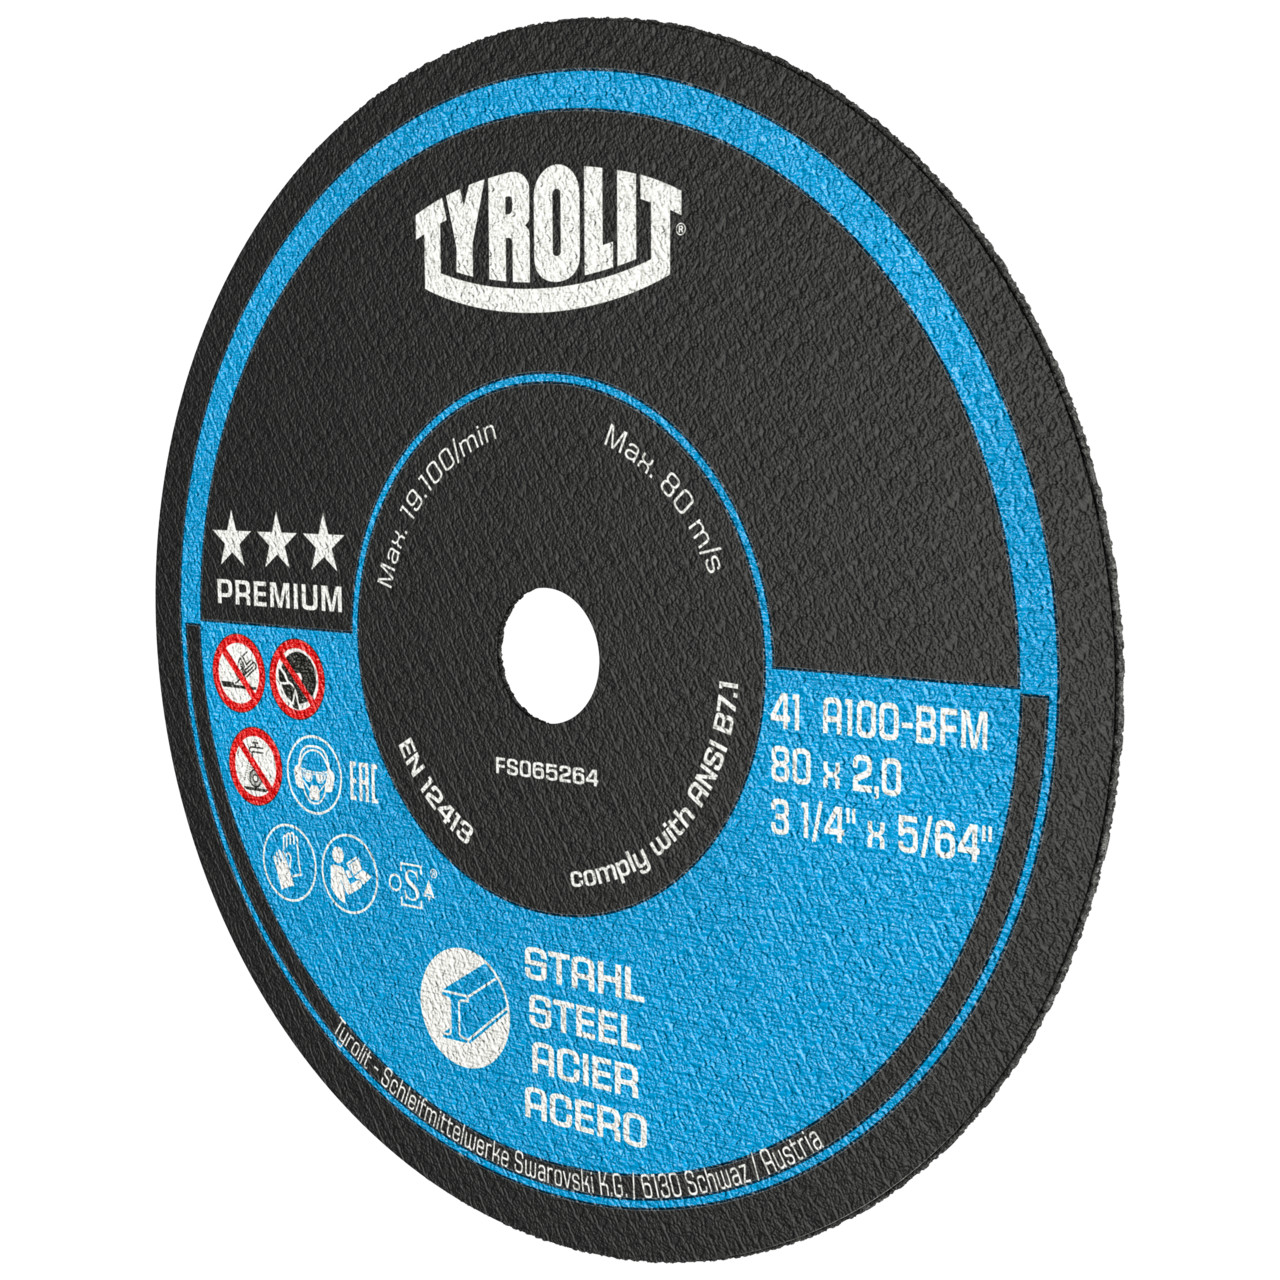 Tyrolit Cutting discs DxDxH 63x2x10 For steel, shape: 41 - straight version, Art. 704198